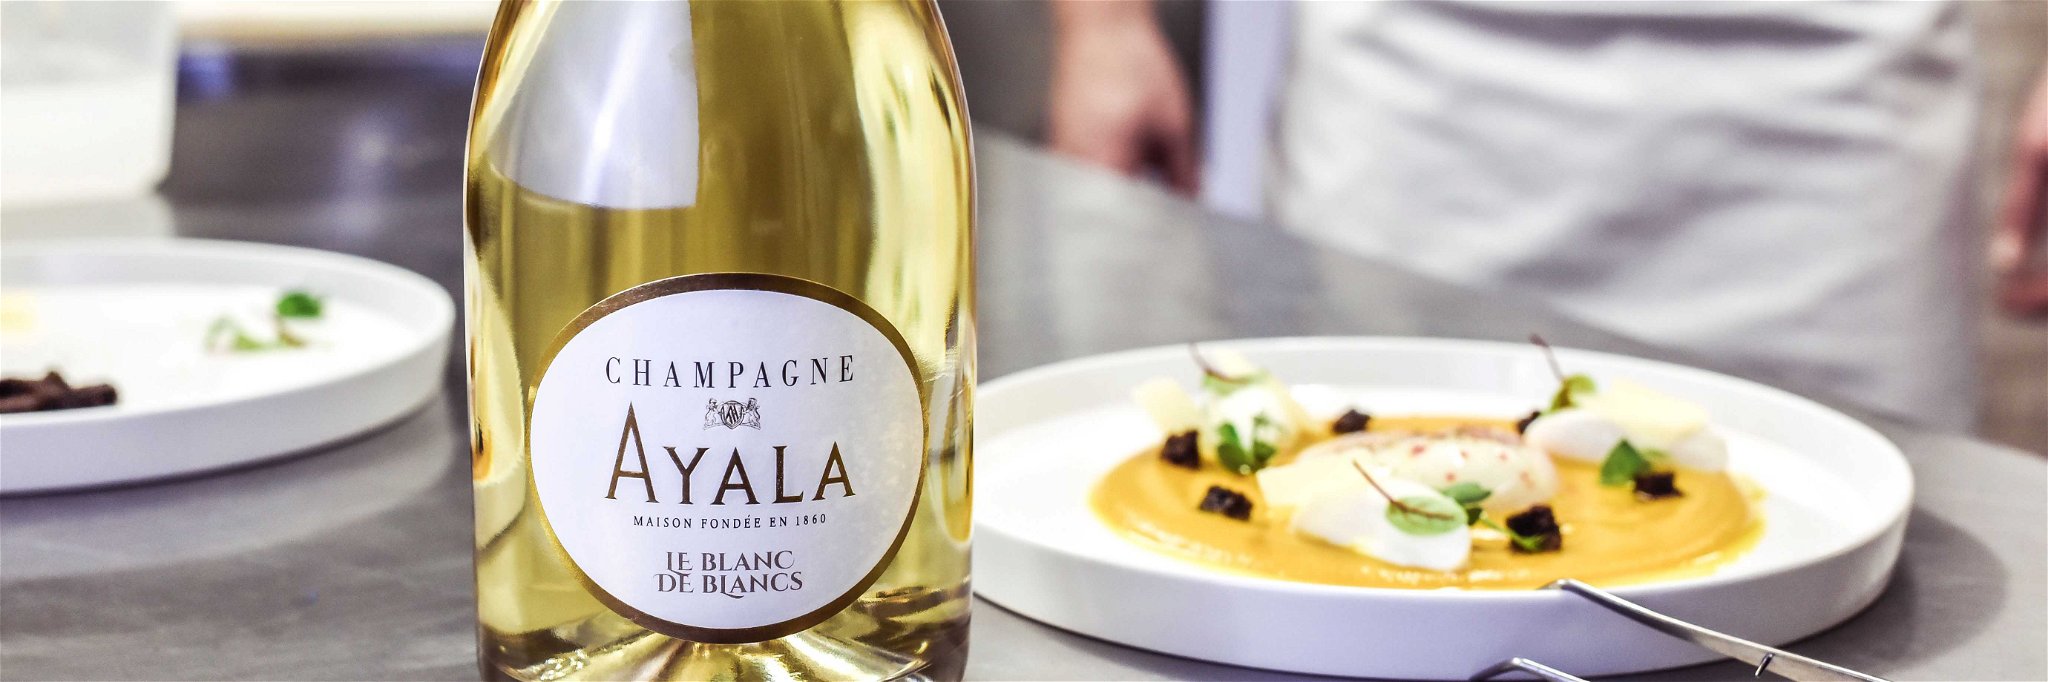 Champagne Ayala Le Blanc de Blancs 2015&nbsp;